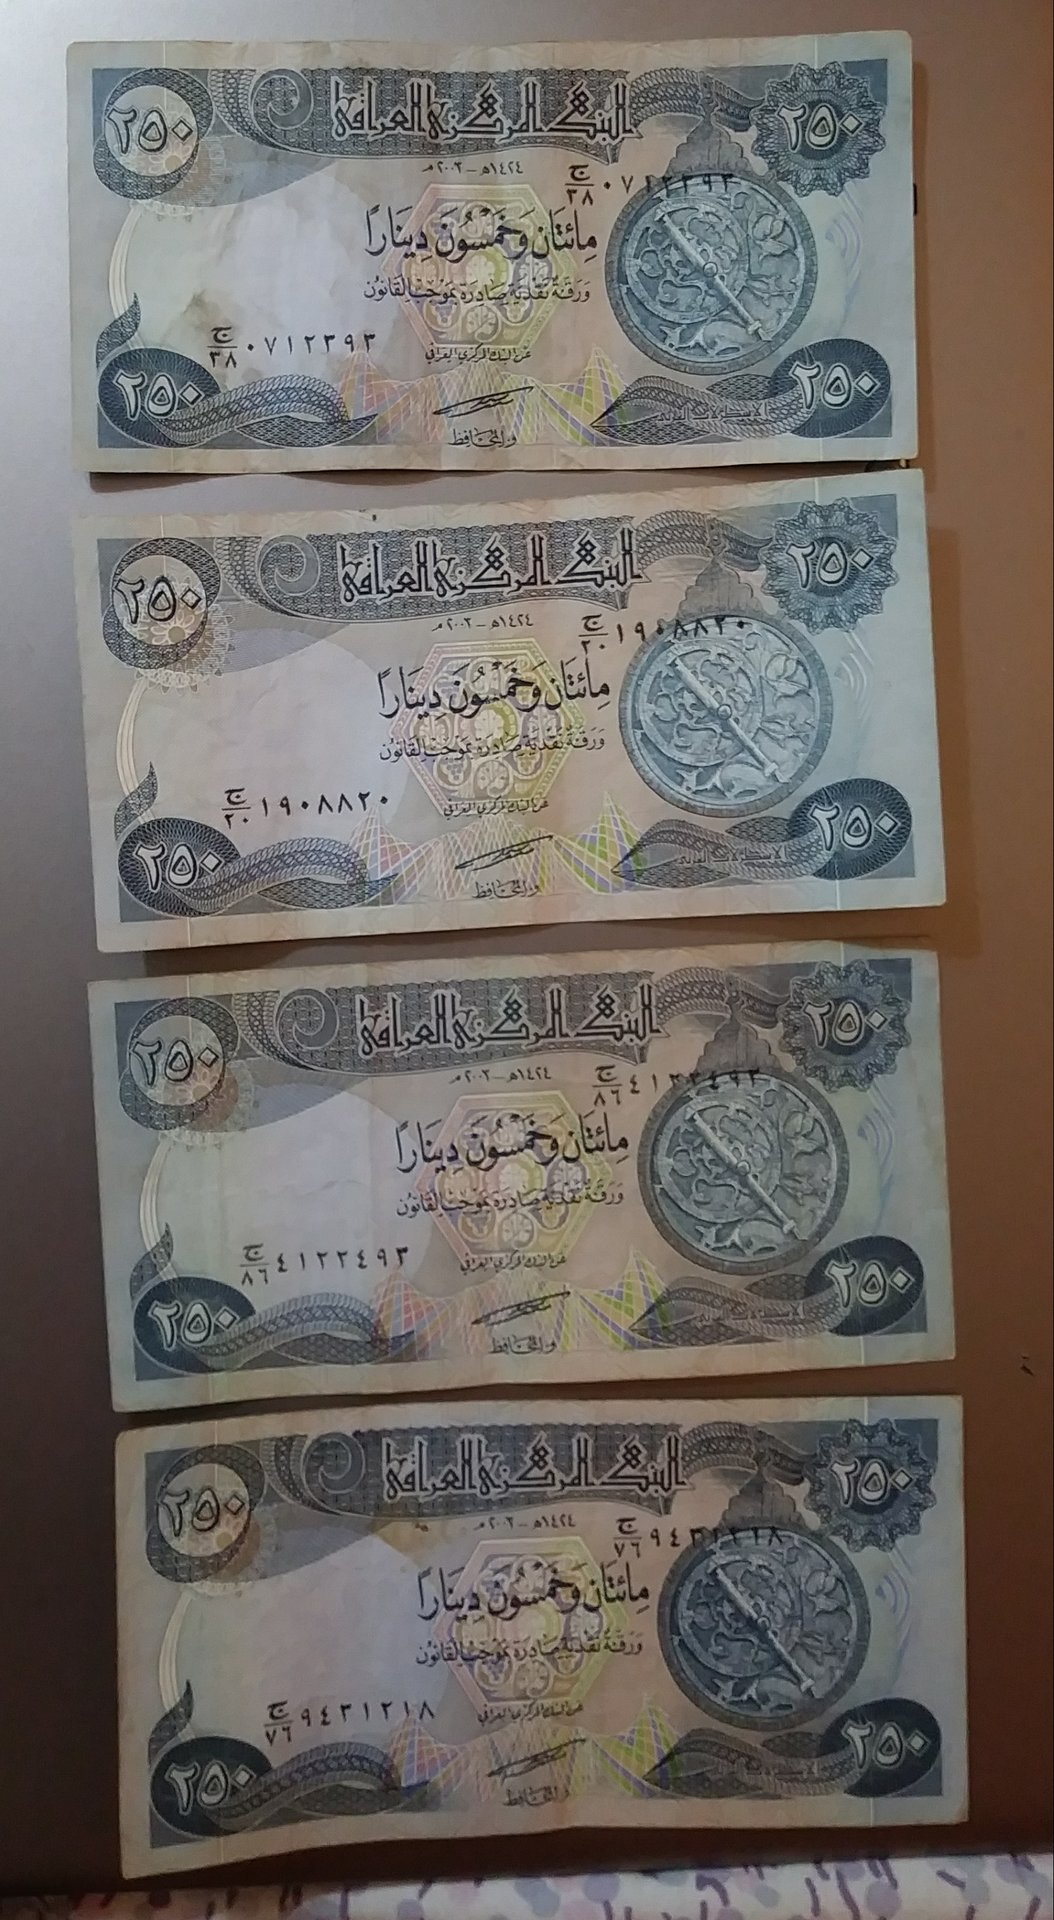 Iraq - 250 Dinars - Central Bank of Iraq | Coin Talk